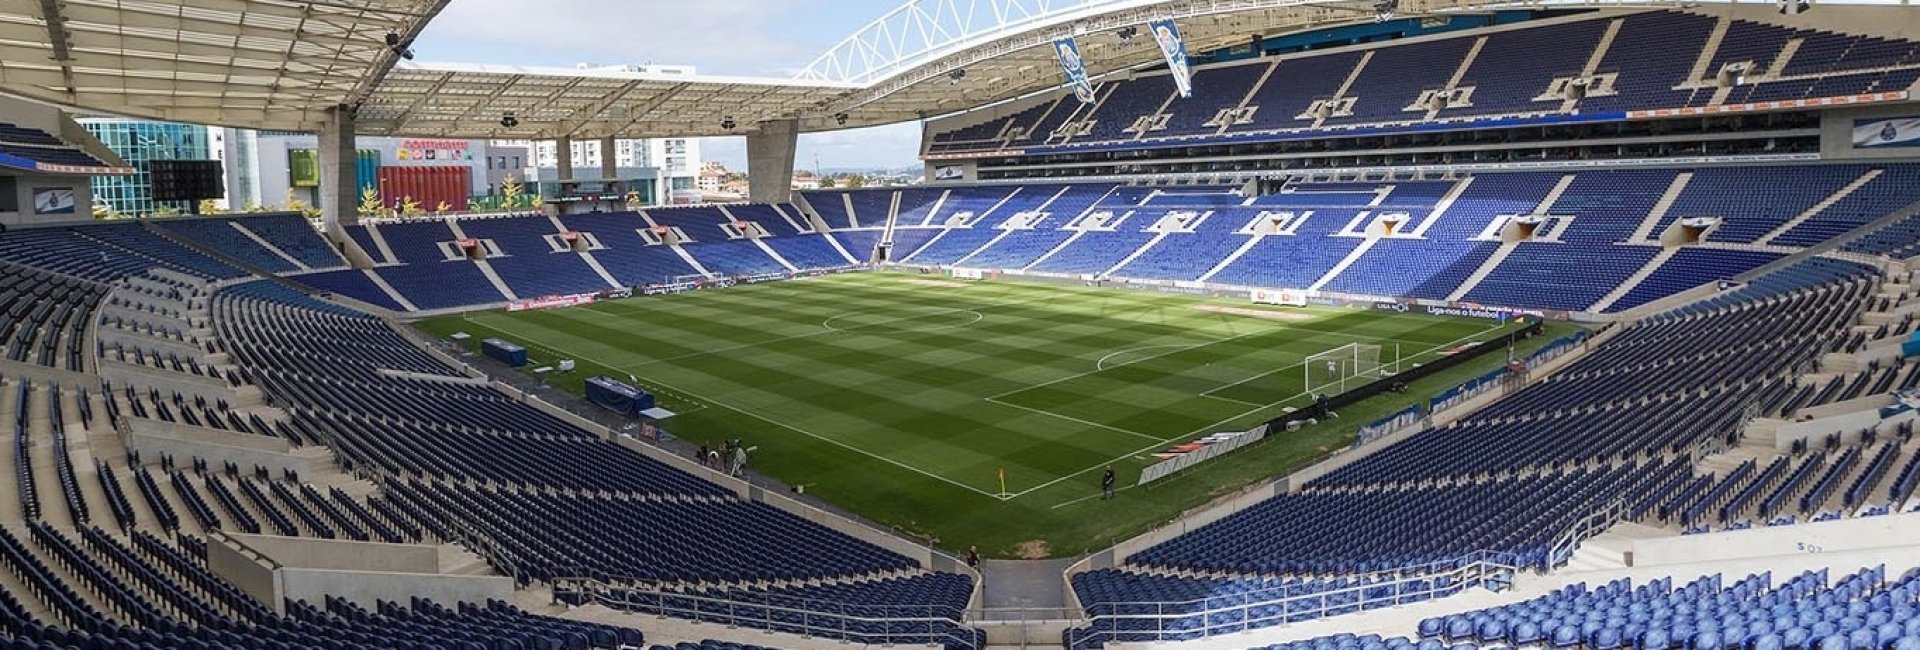 Estadio do Dragao - FC Porto - Voetbalstadion.net